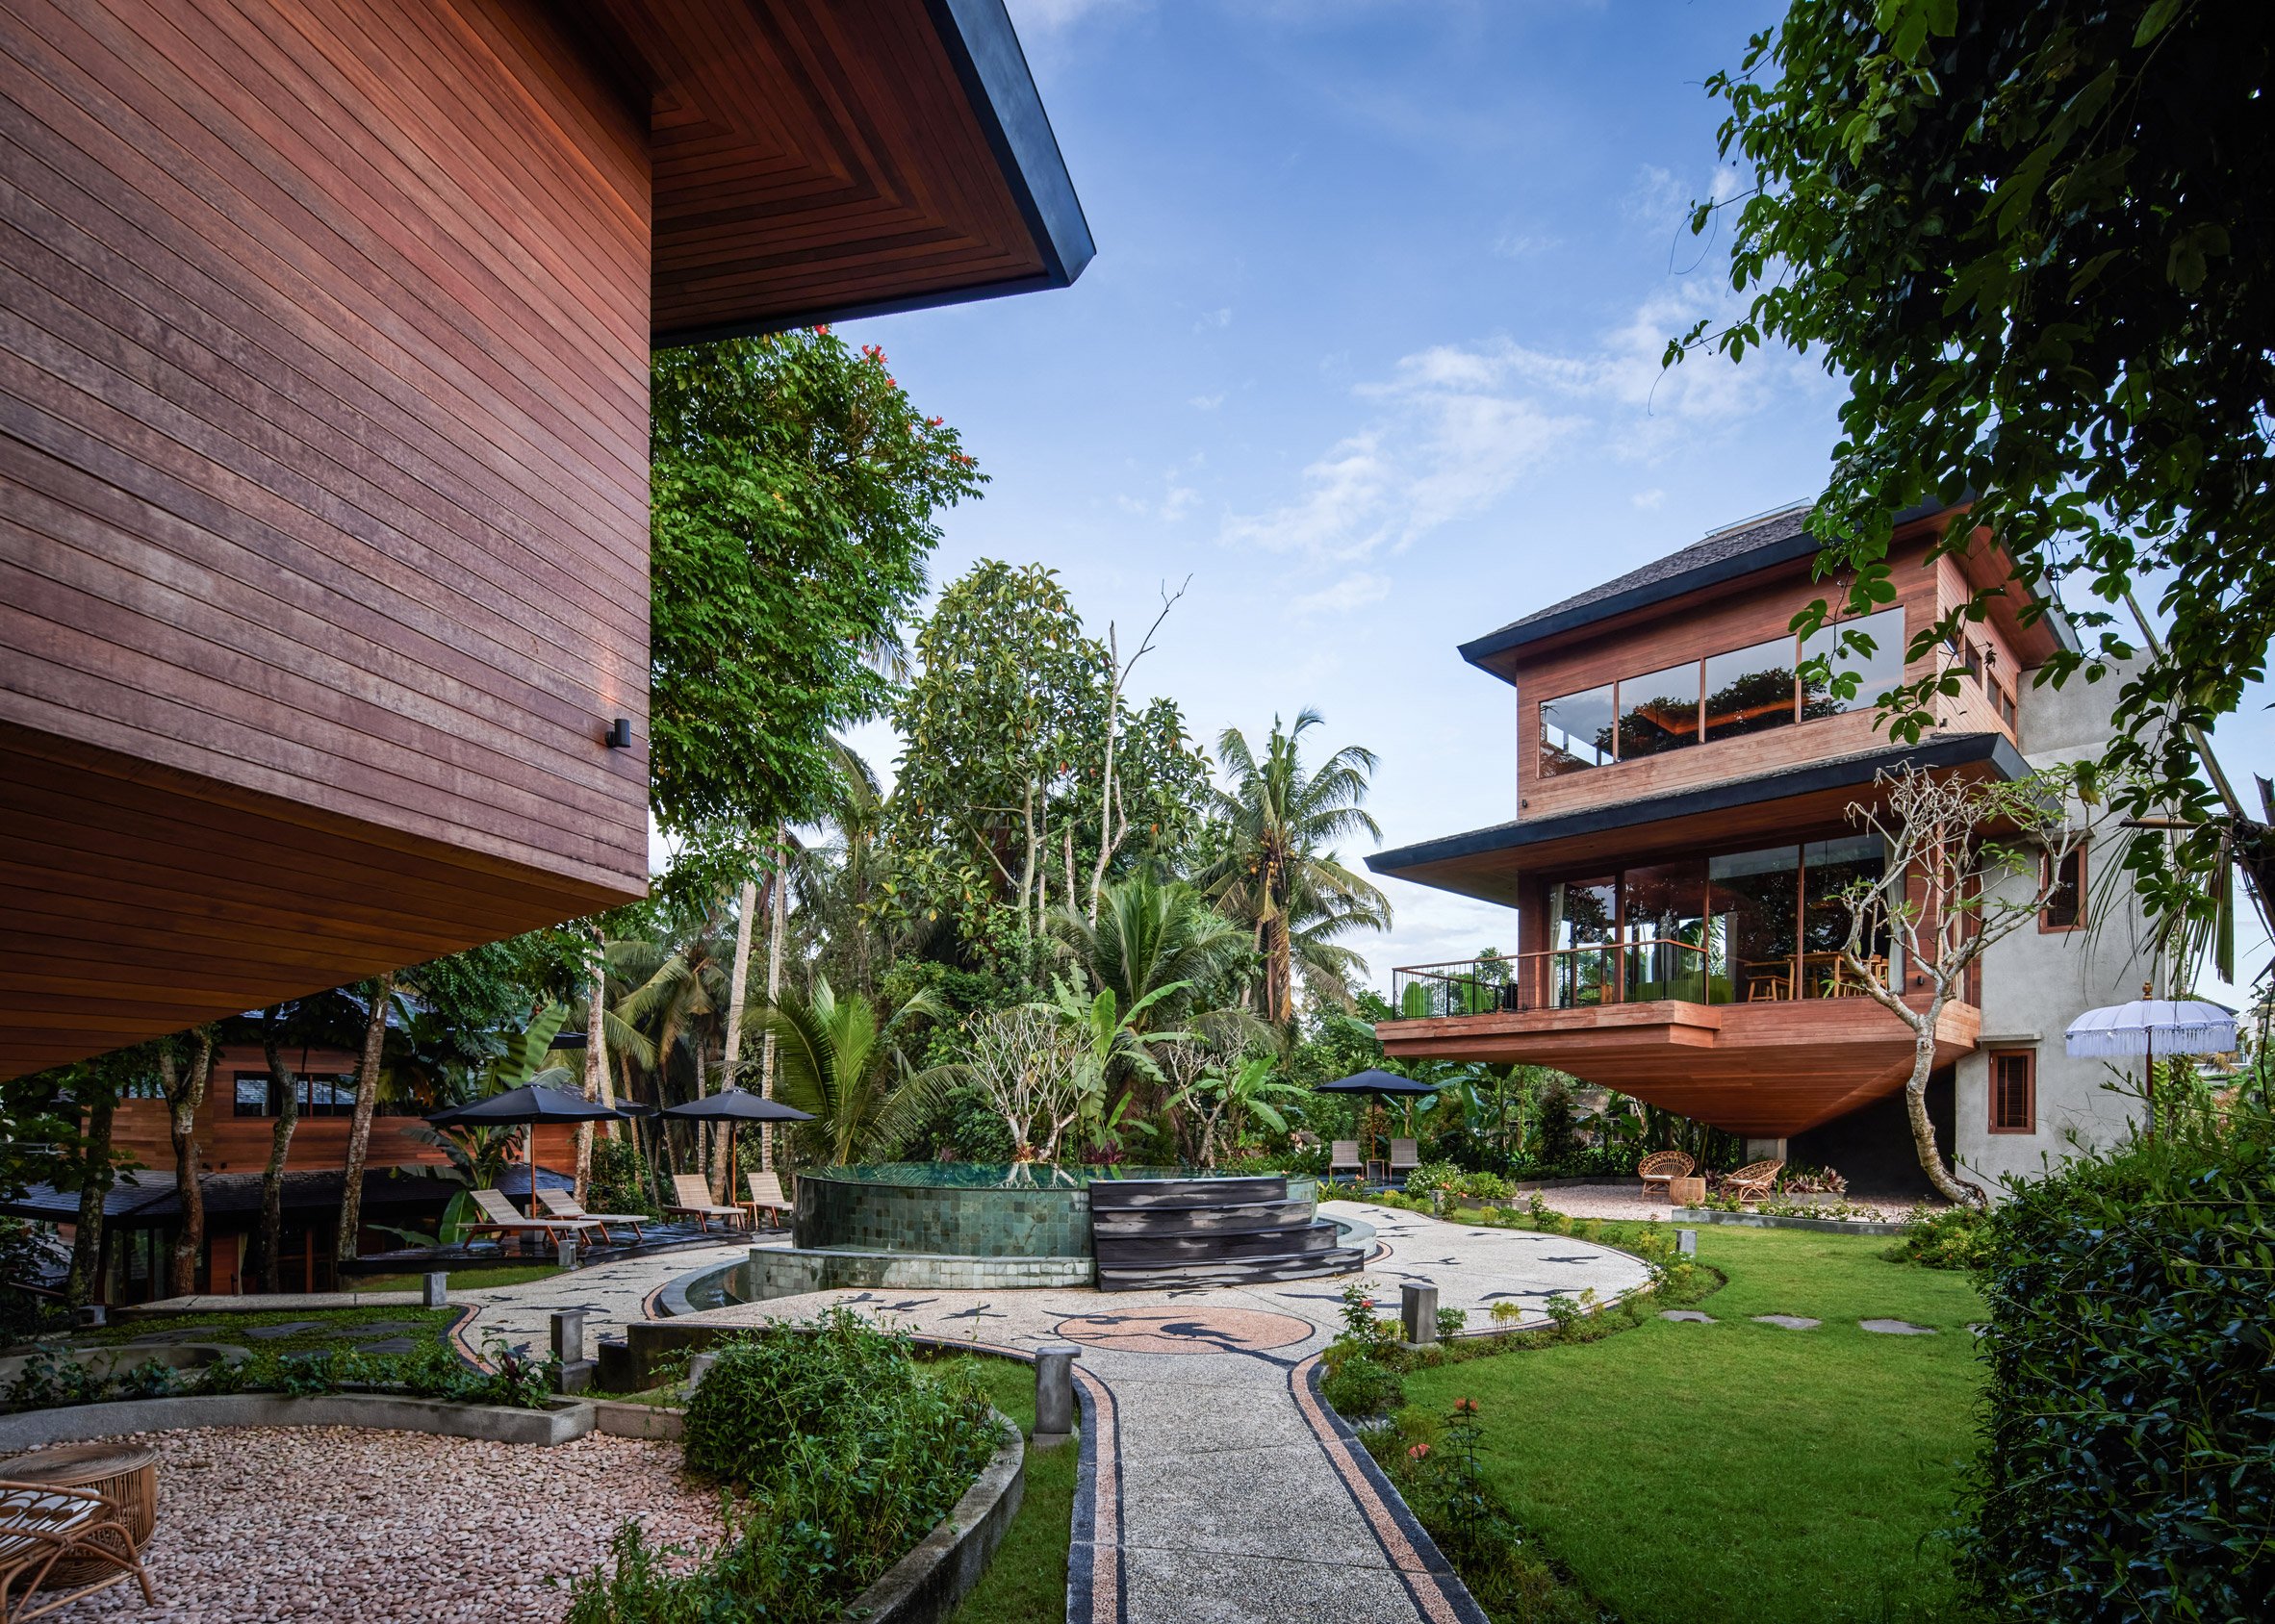 Courtyard of the Birdhouses resort in Bali